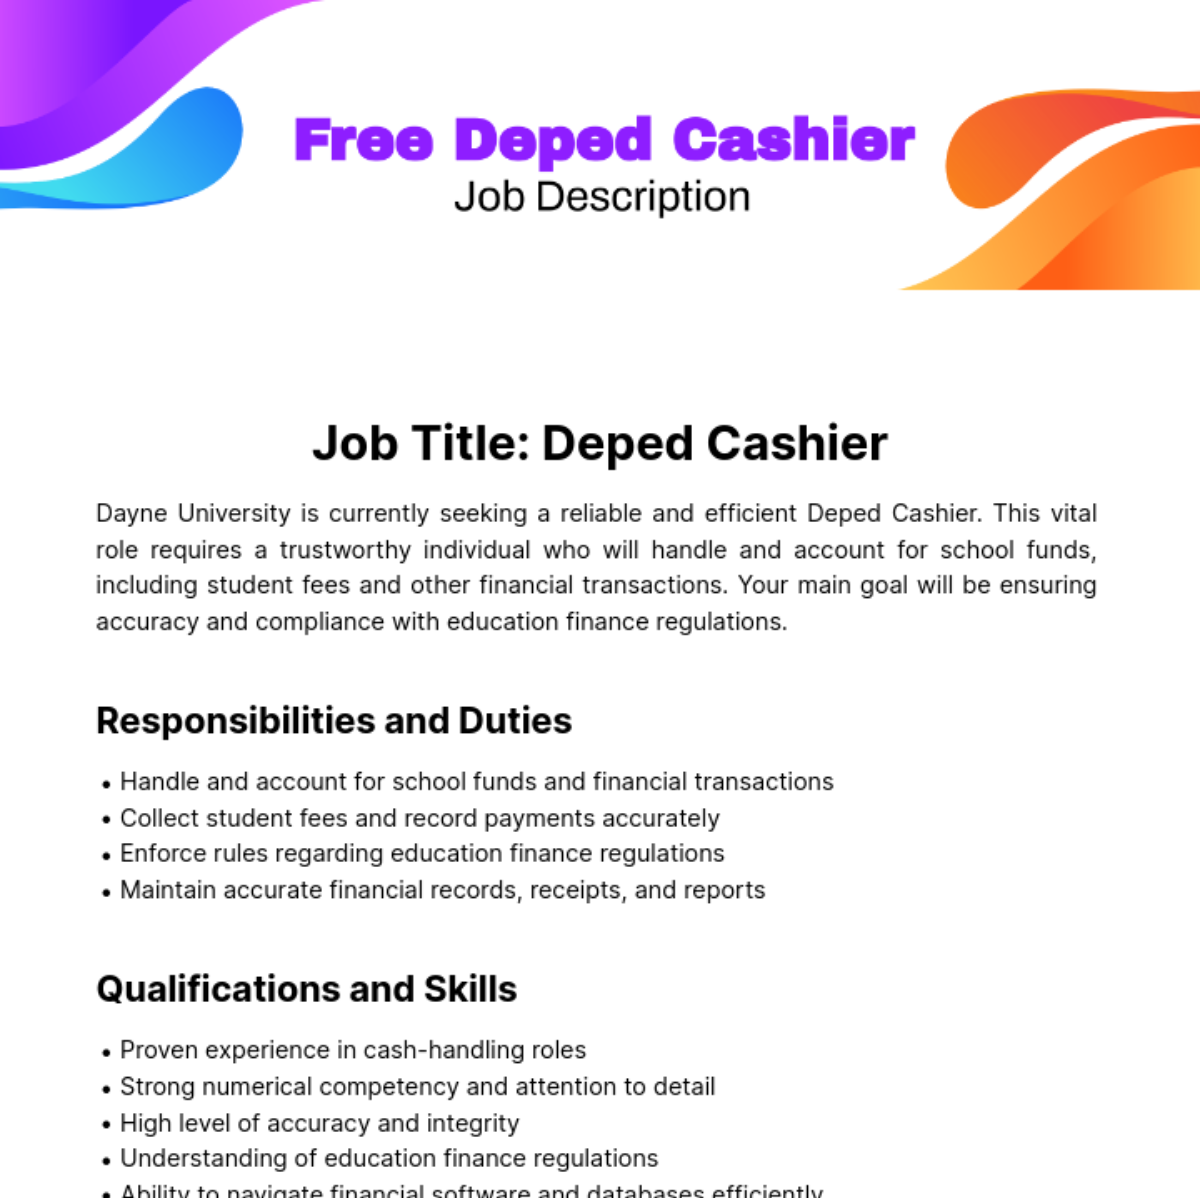 Free Deped Cashier Job Description Template